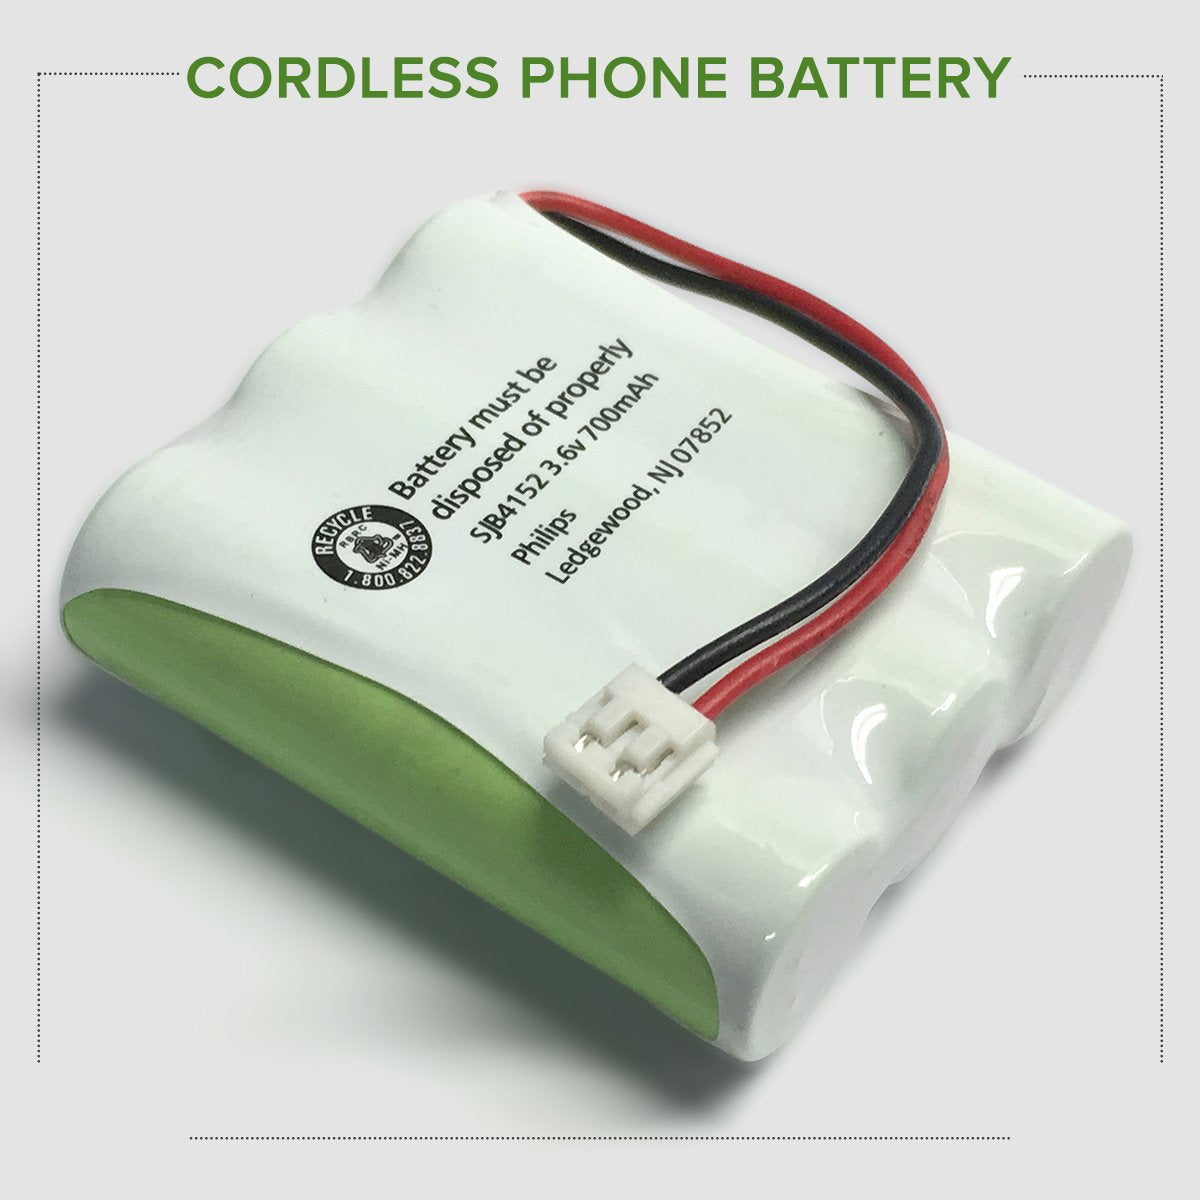 AT&T  9353 Cordless Phone Battery